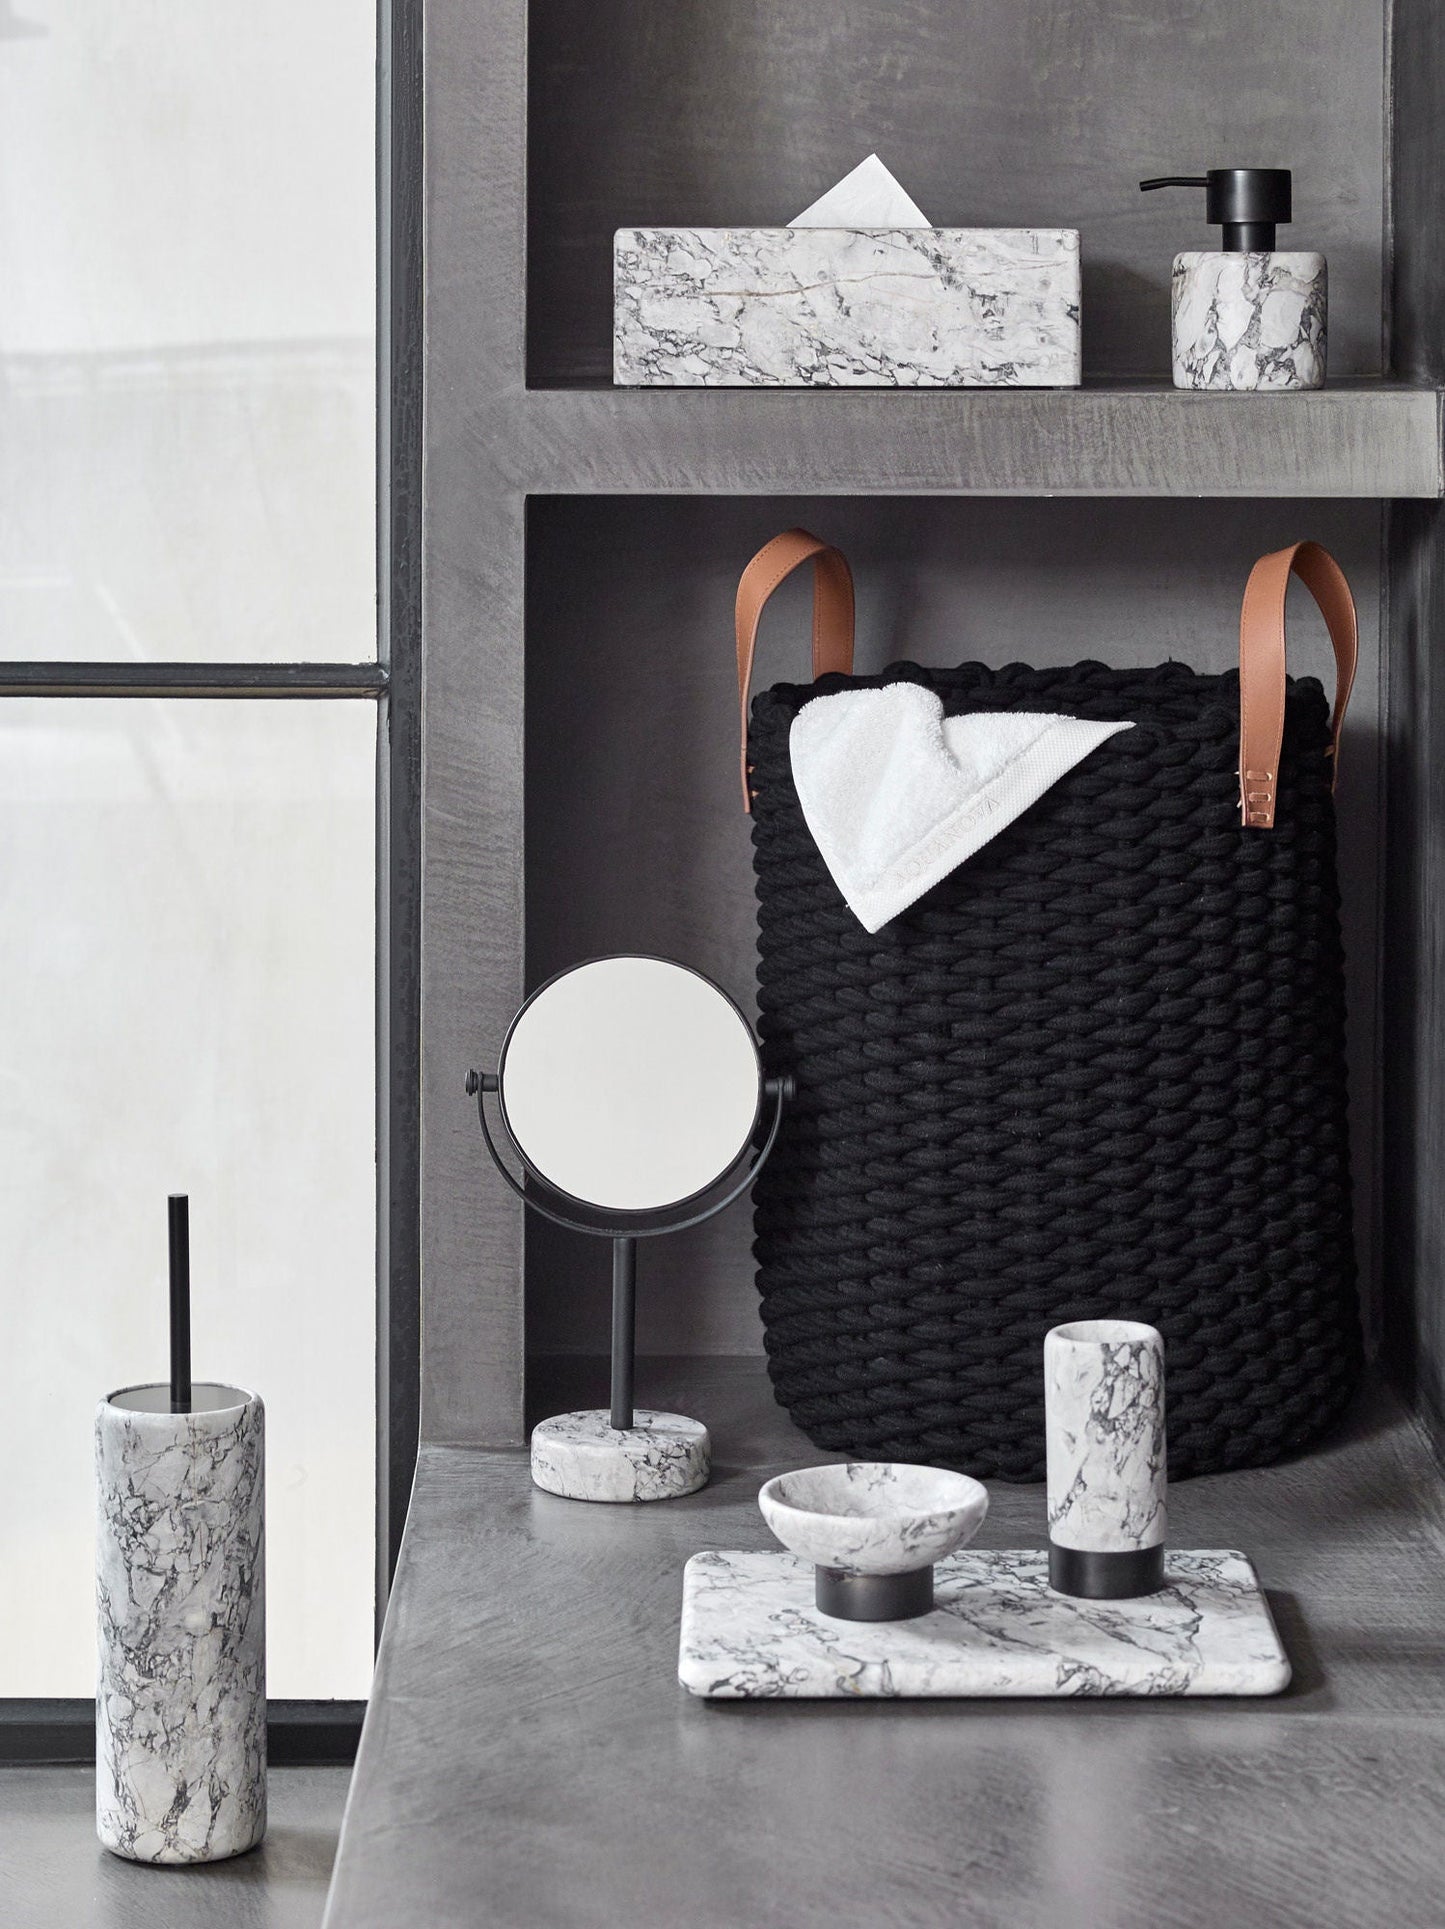 Nero White Stone Bathroom Accessories - Toothbrush Holder - |VESIMI Design| Luxury and Rustic bathrooms online